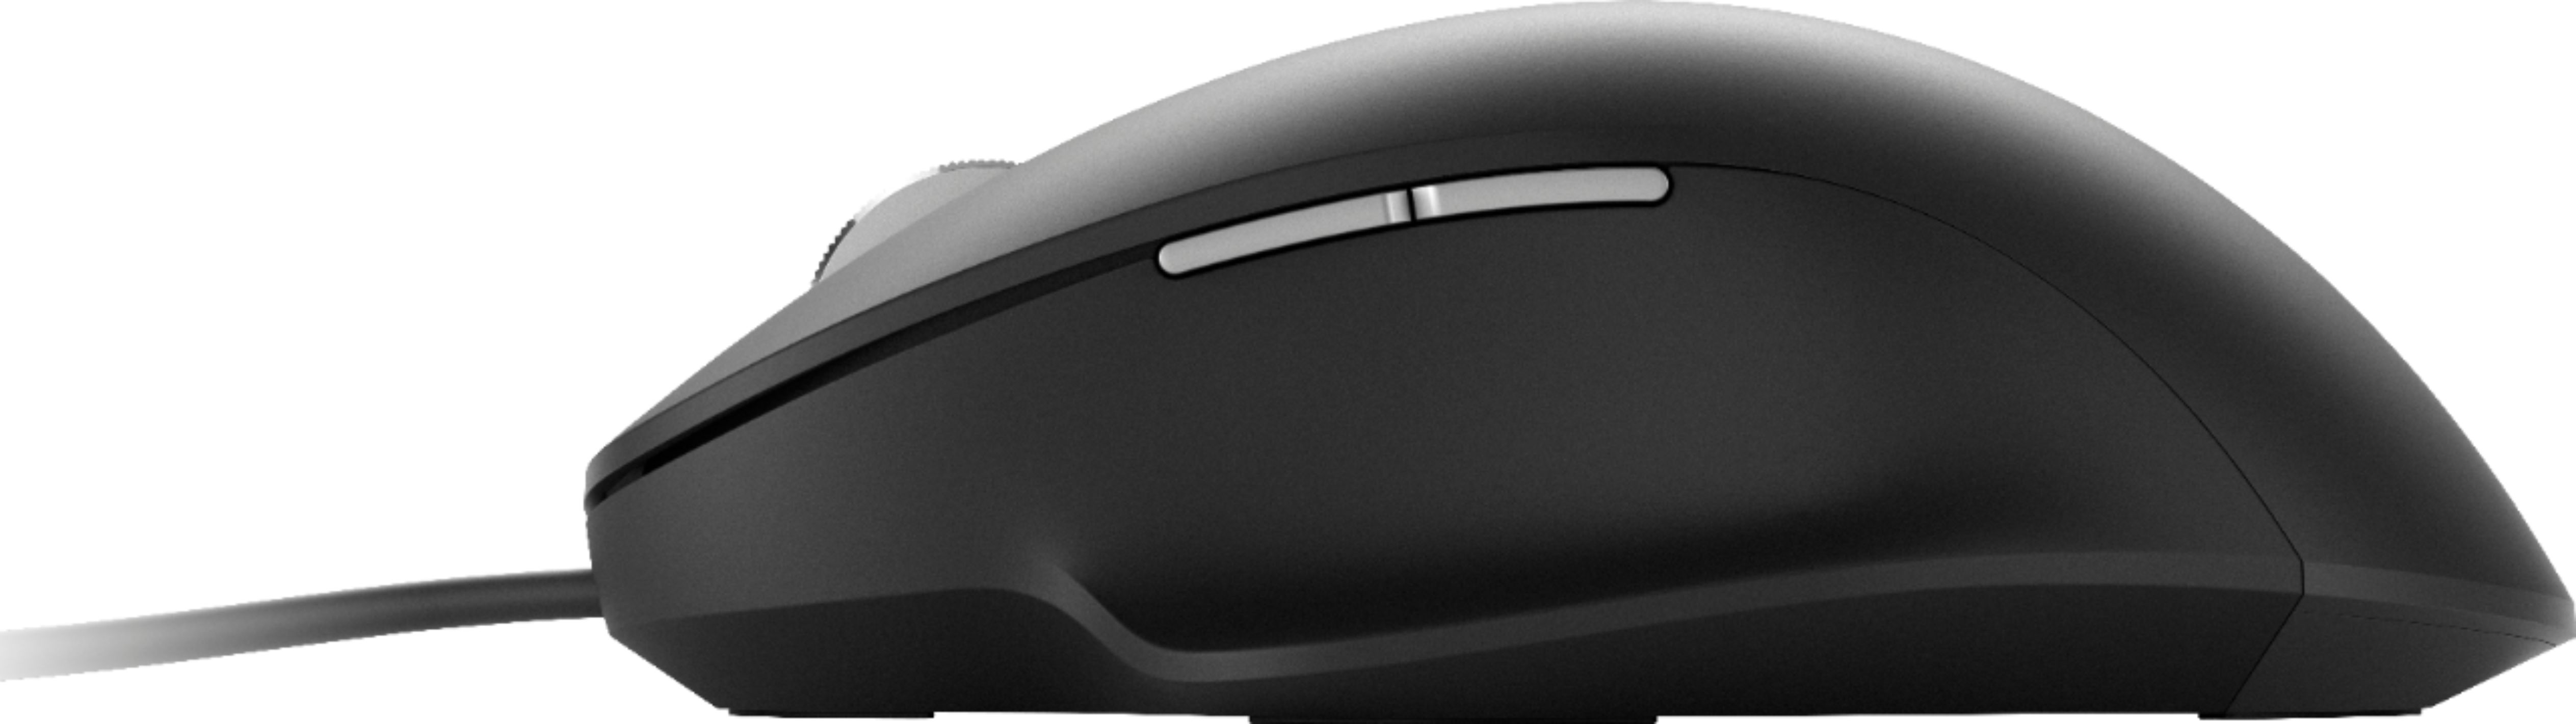 microsoft ergonomic mouse